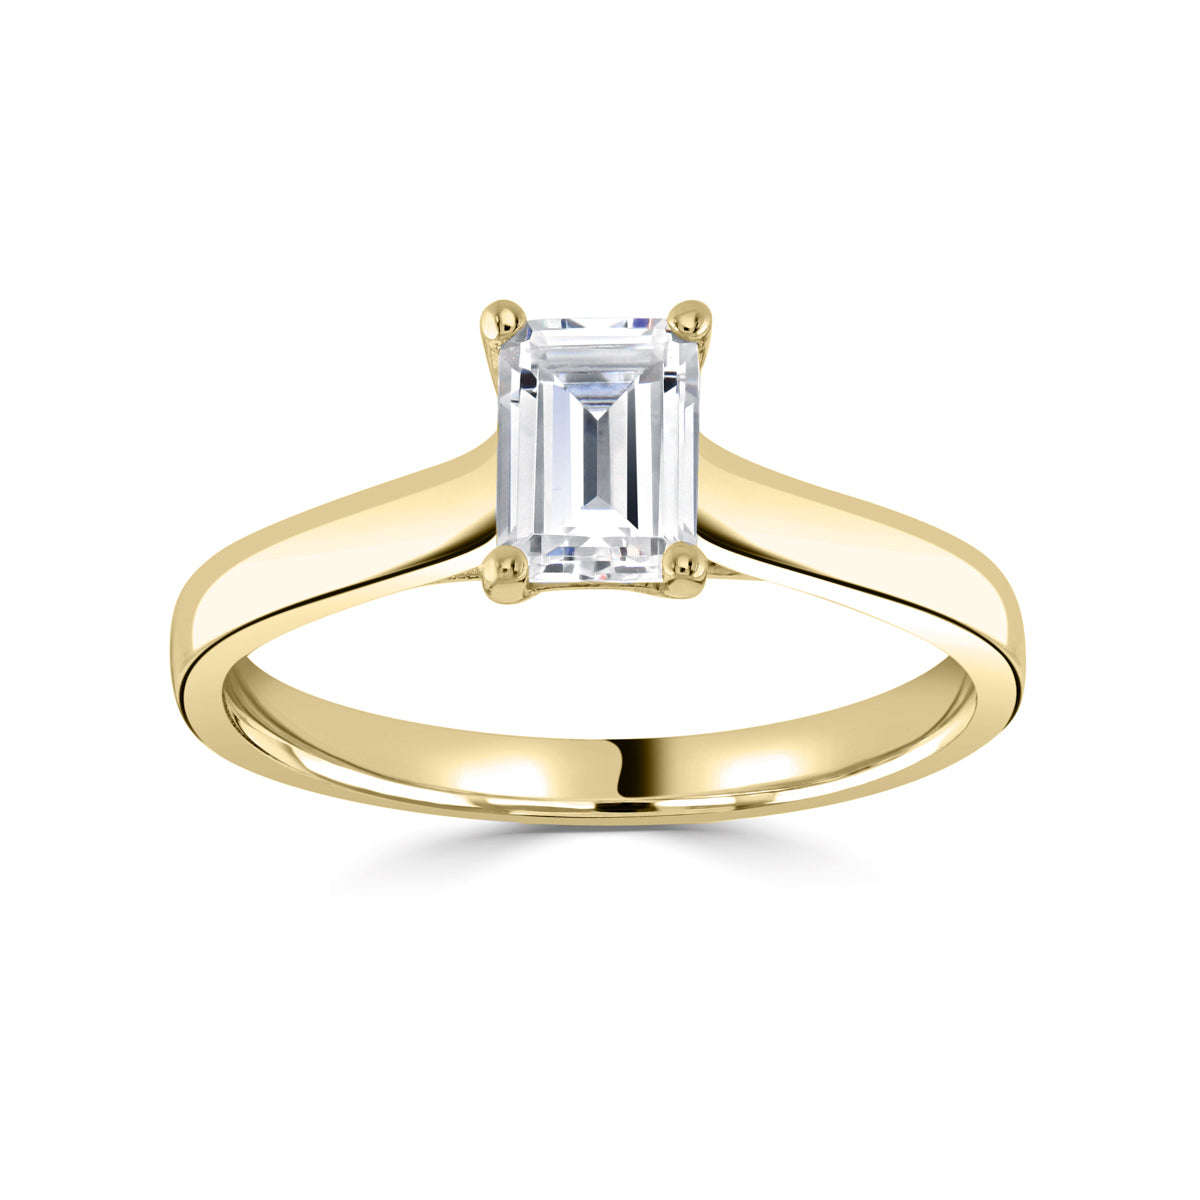 Emerald cut 4 claw diamond crossover ring